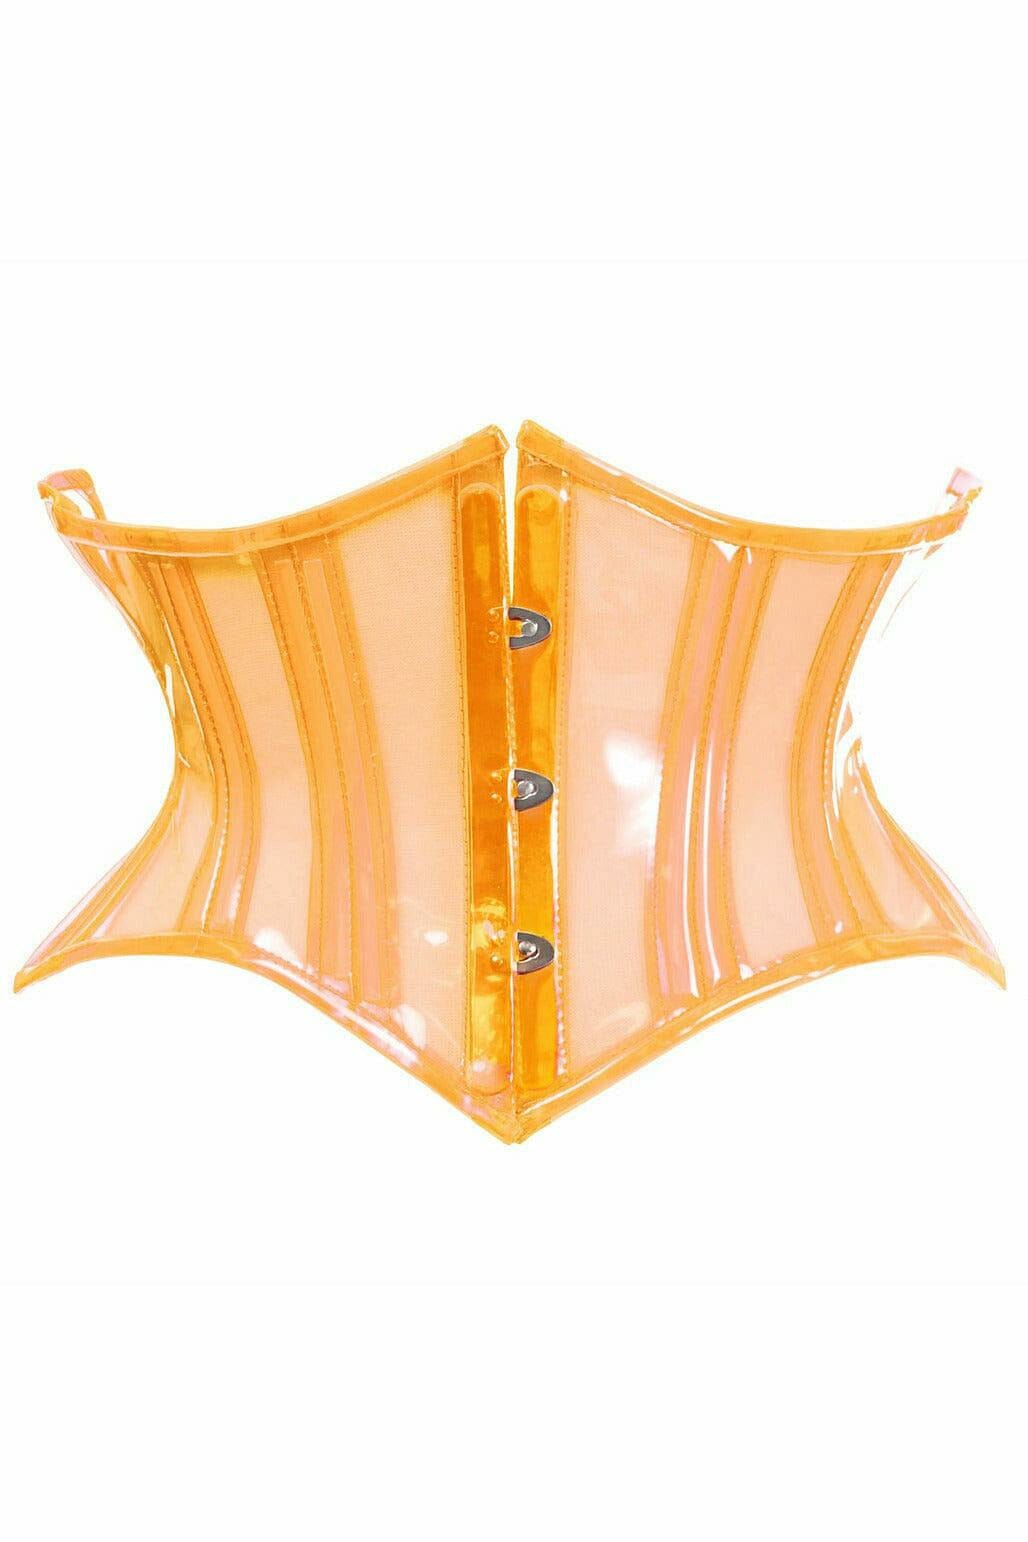 Lavish Clear Orange Curvy Cut Mini Cincher Corset-Waist Cinchers-Daisy Corsets-Clear-S-SEXYSHOES.COM